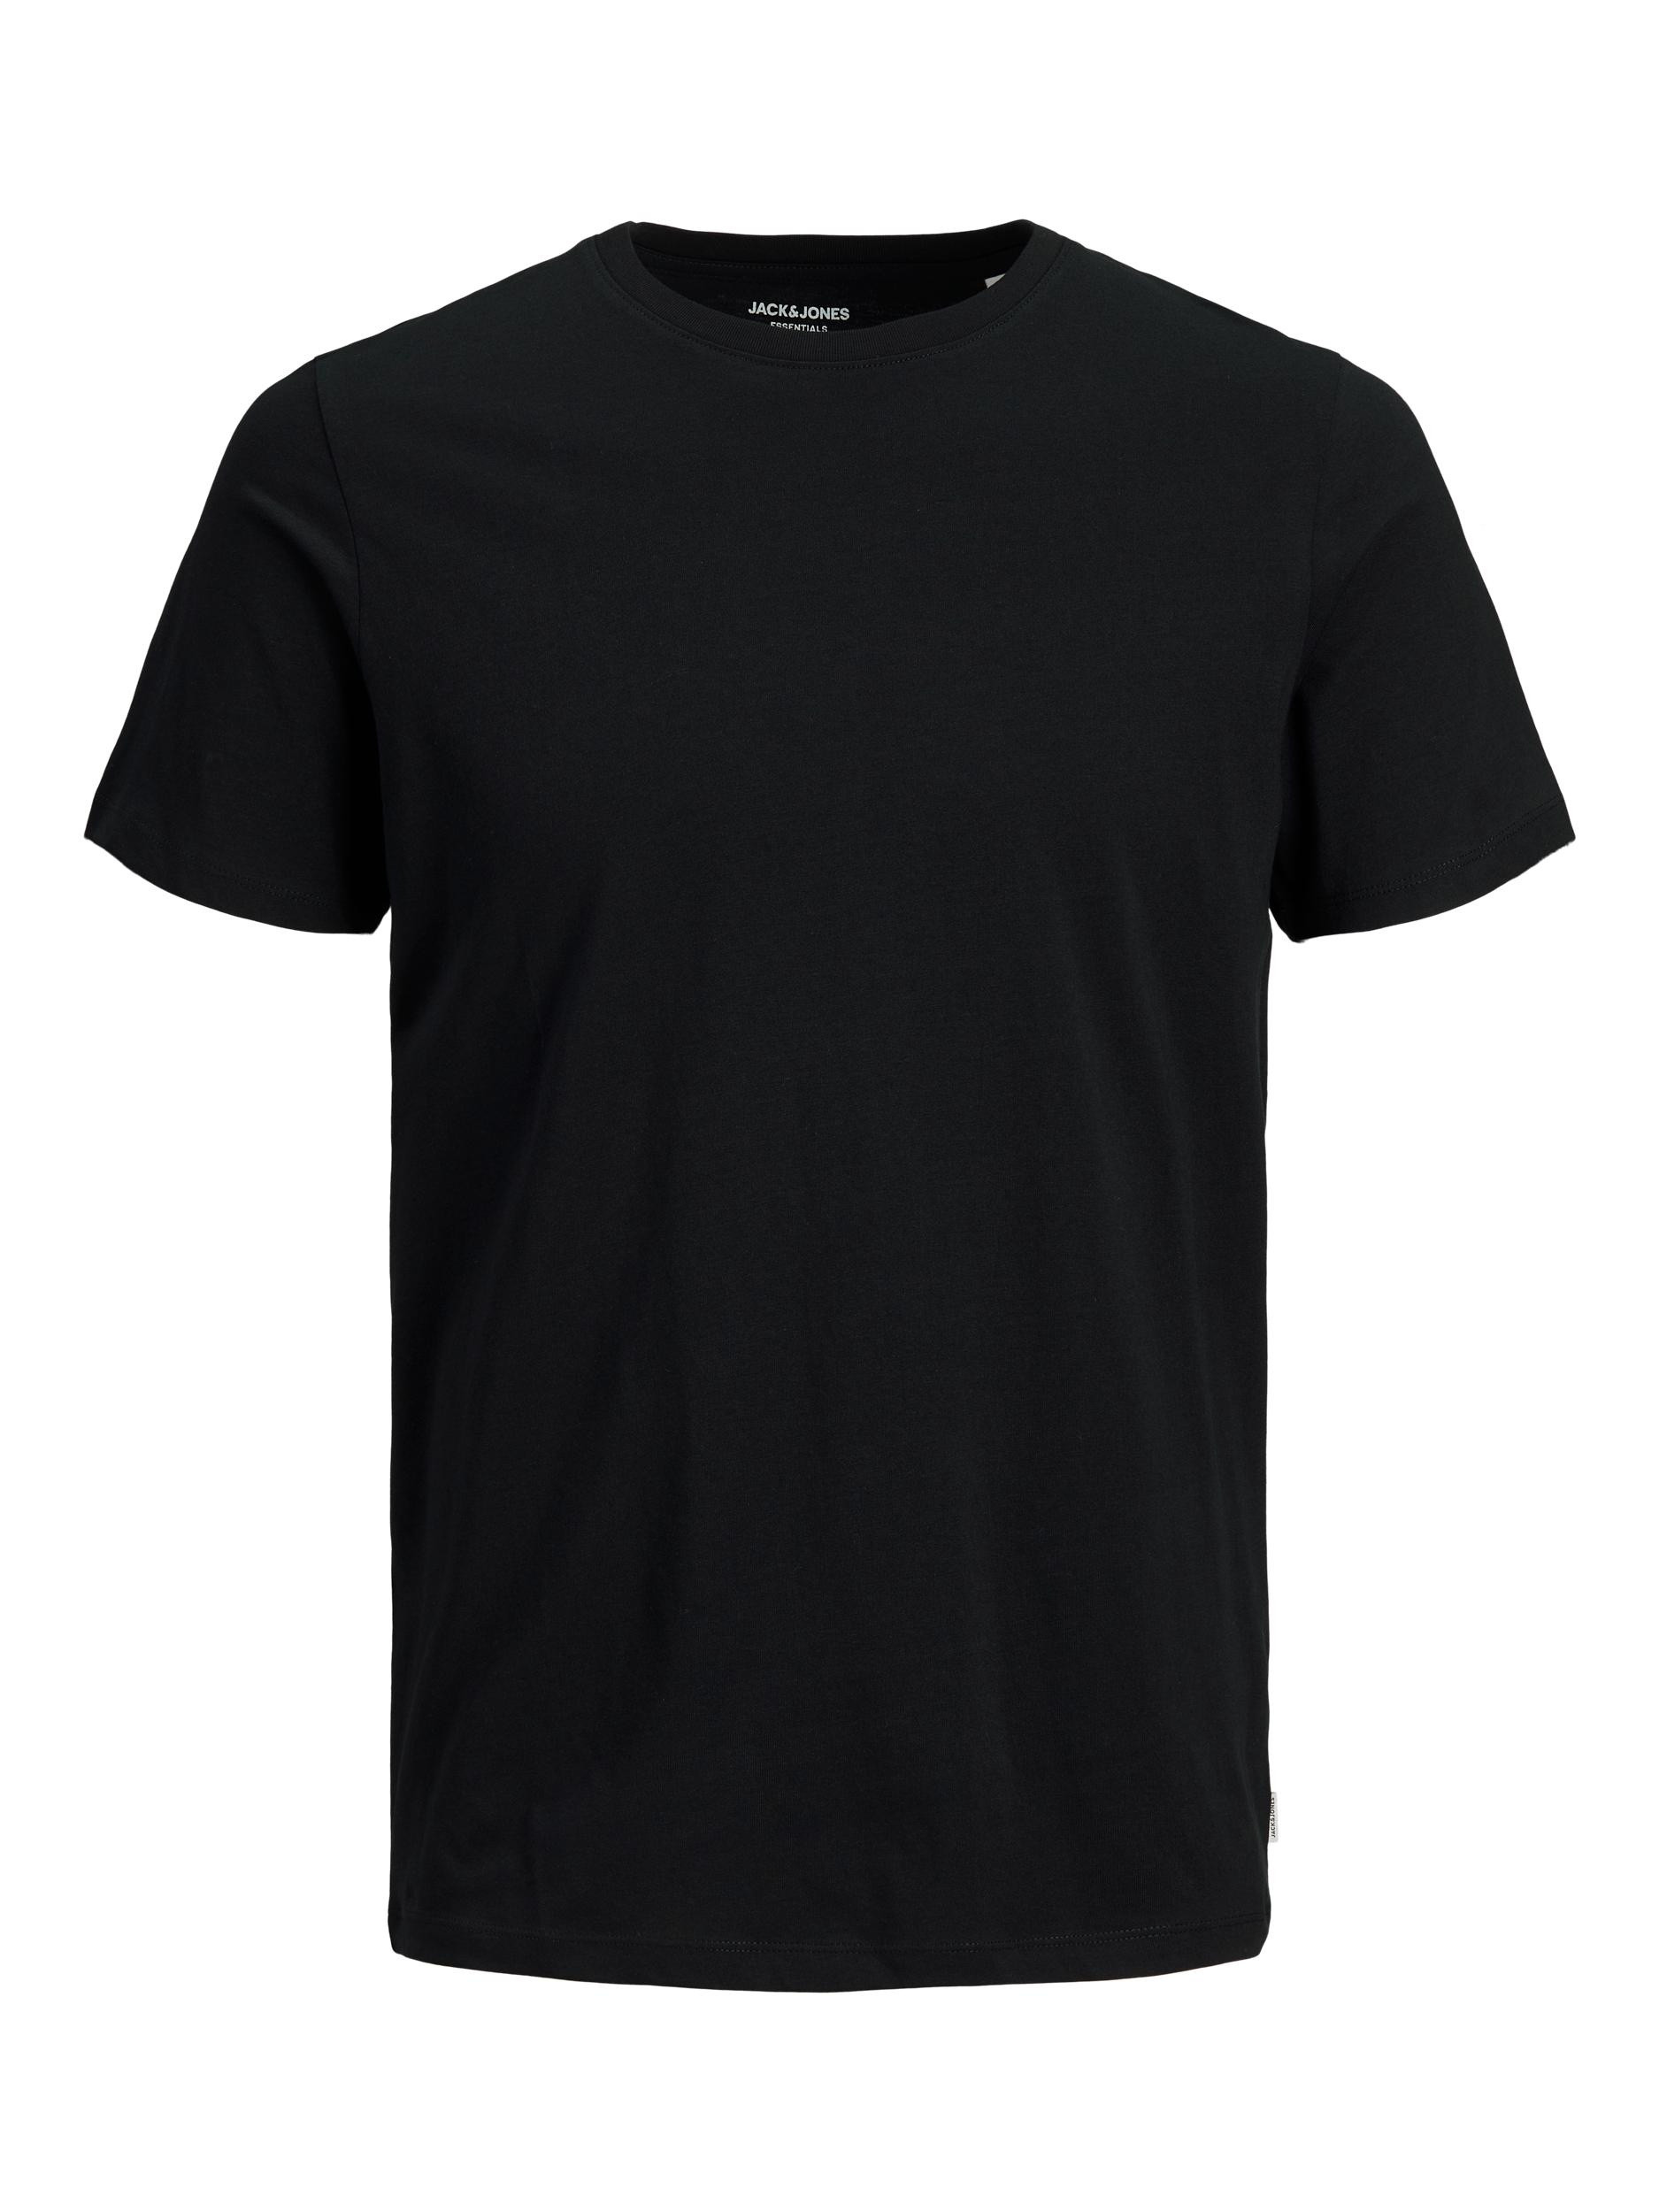 Jack & Jones - Cotton T-shirt, Black, large image number 0